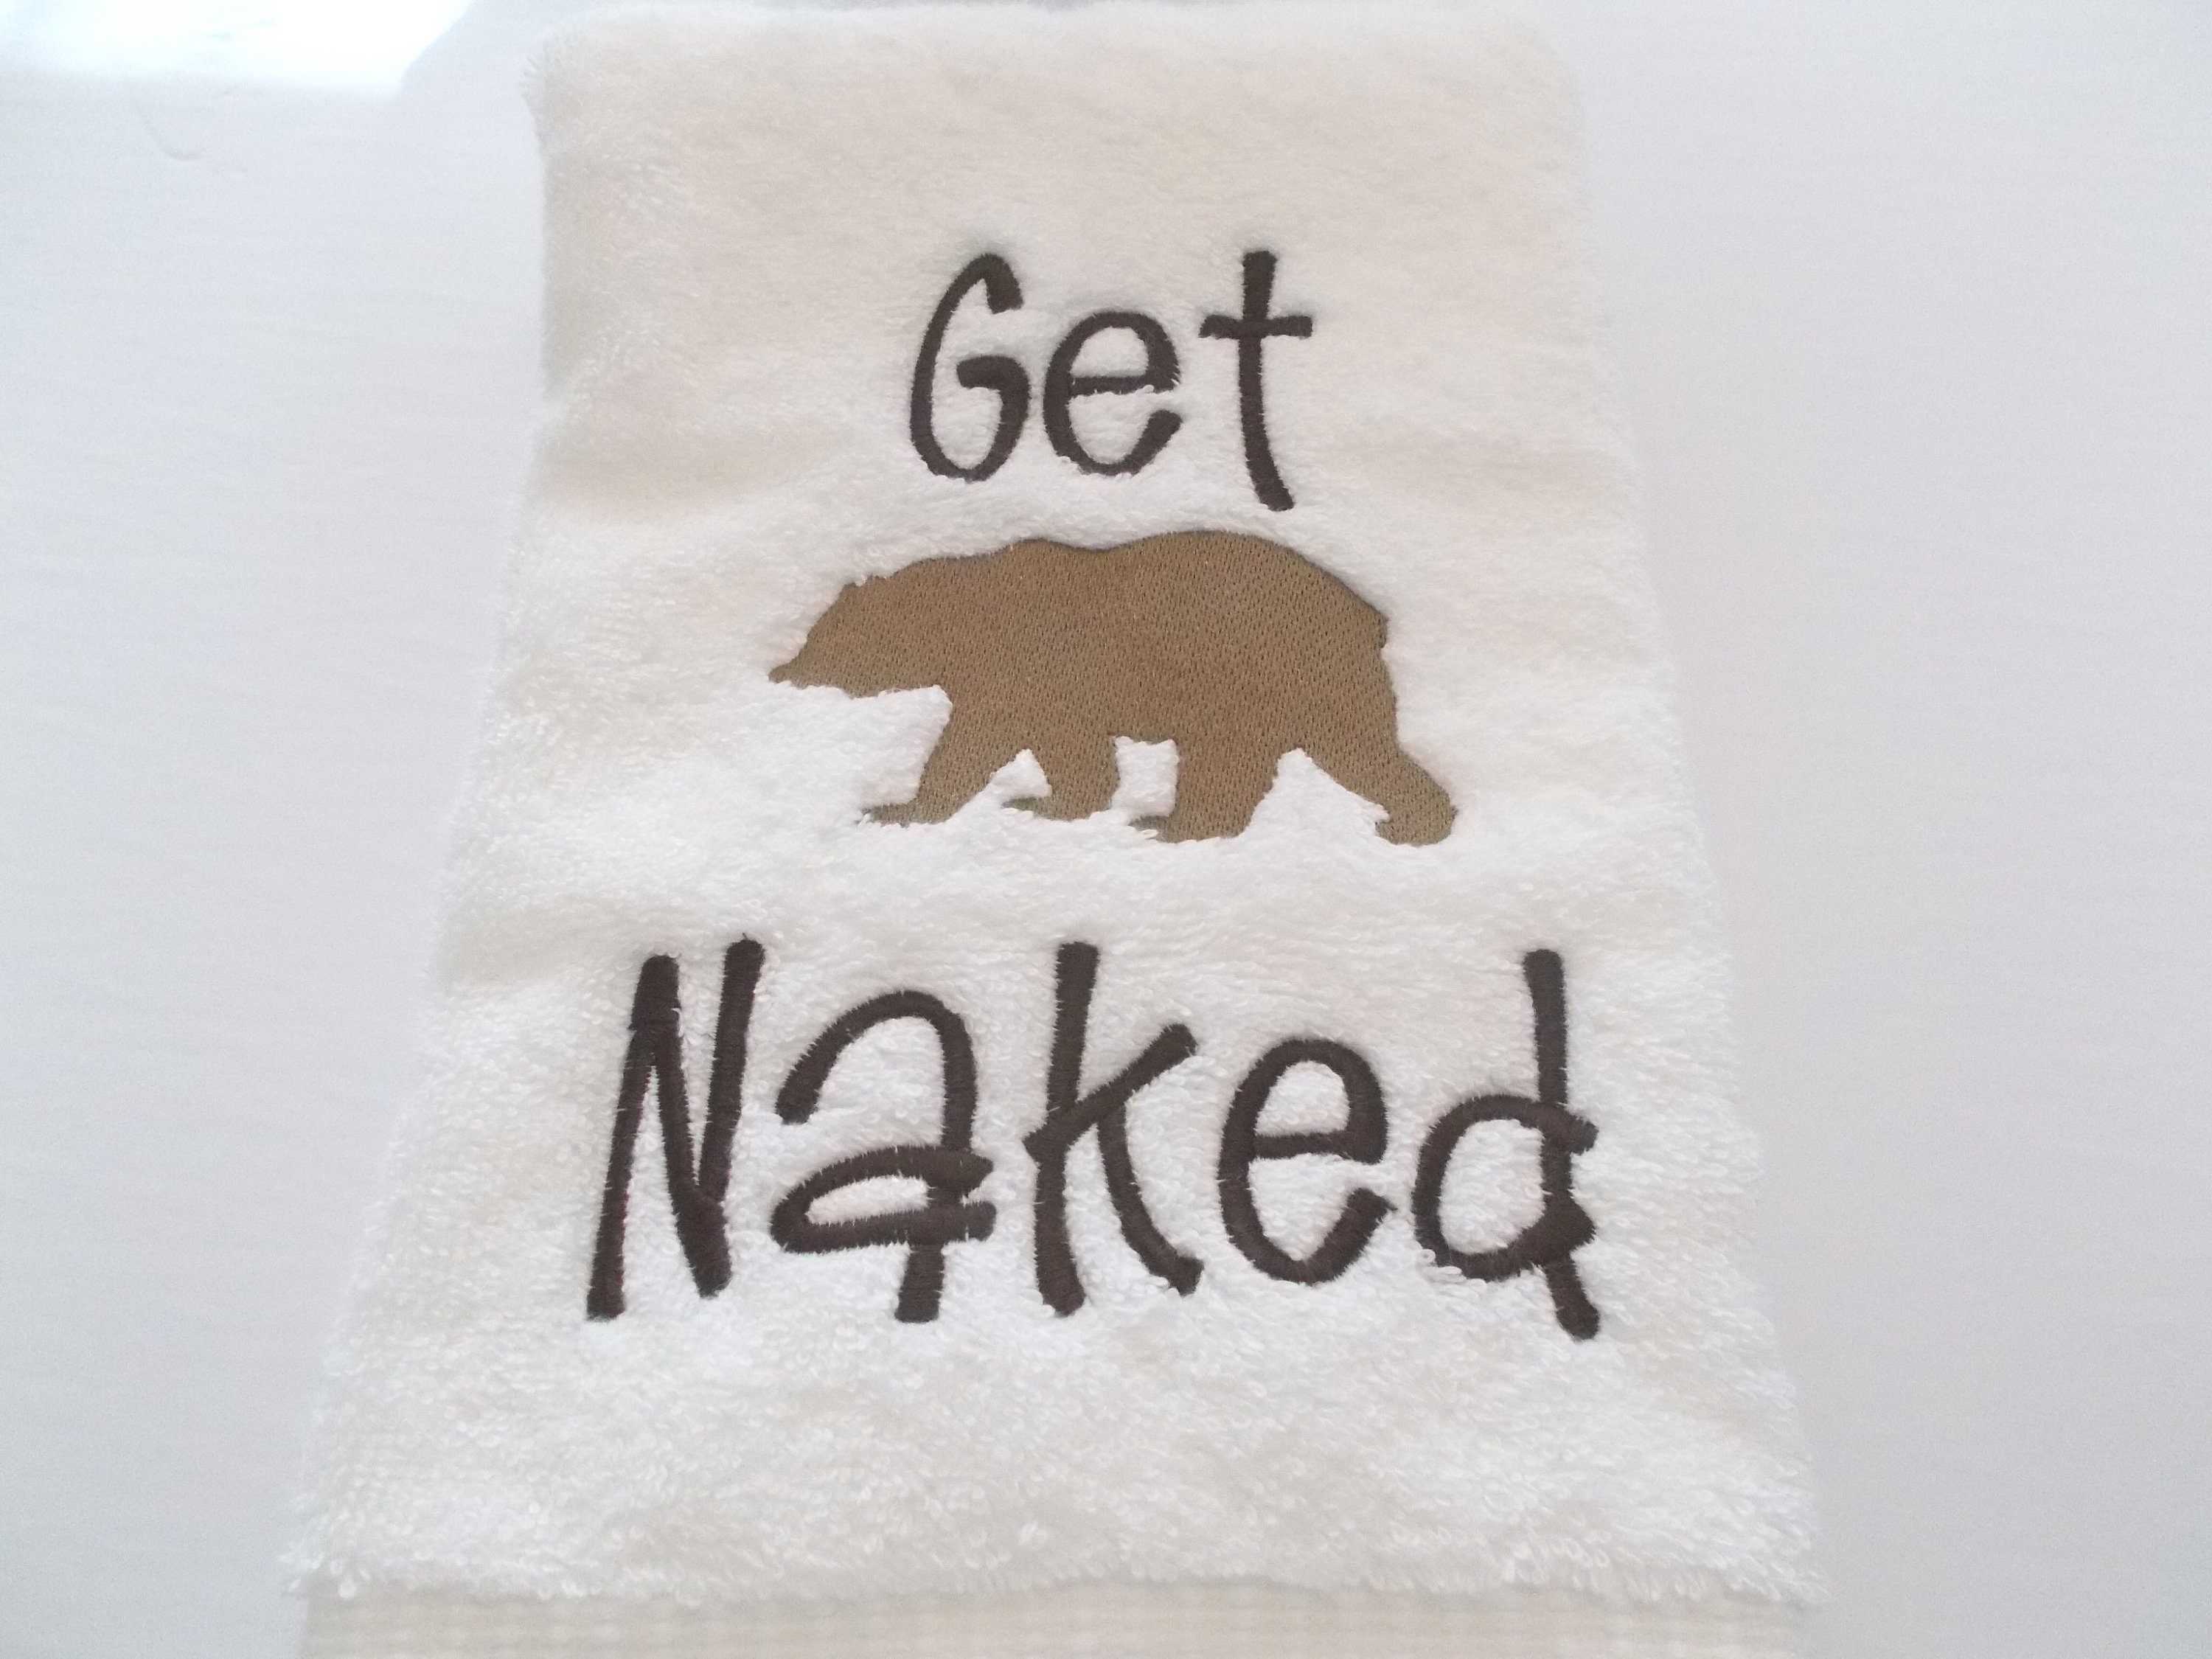 Bear - naked - cabin - lake house - Hand Towel - Bathroom - Embroidered  towel - Bathroom Hand Towel - funny bathroom - bathroom Towel 